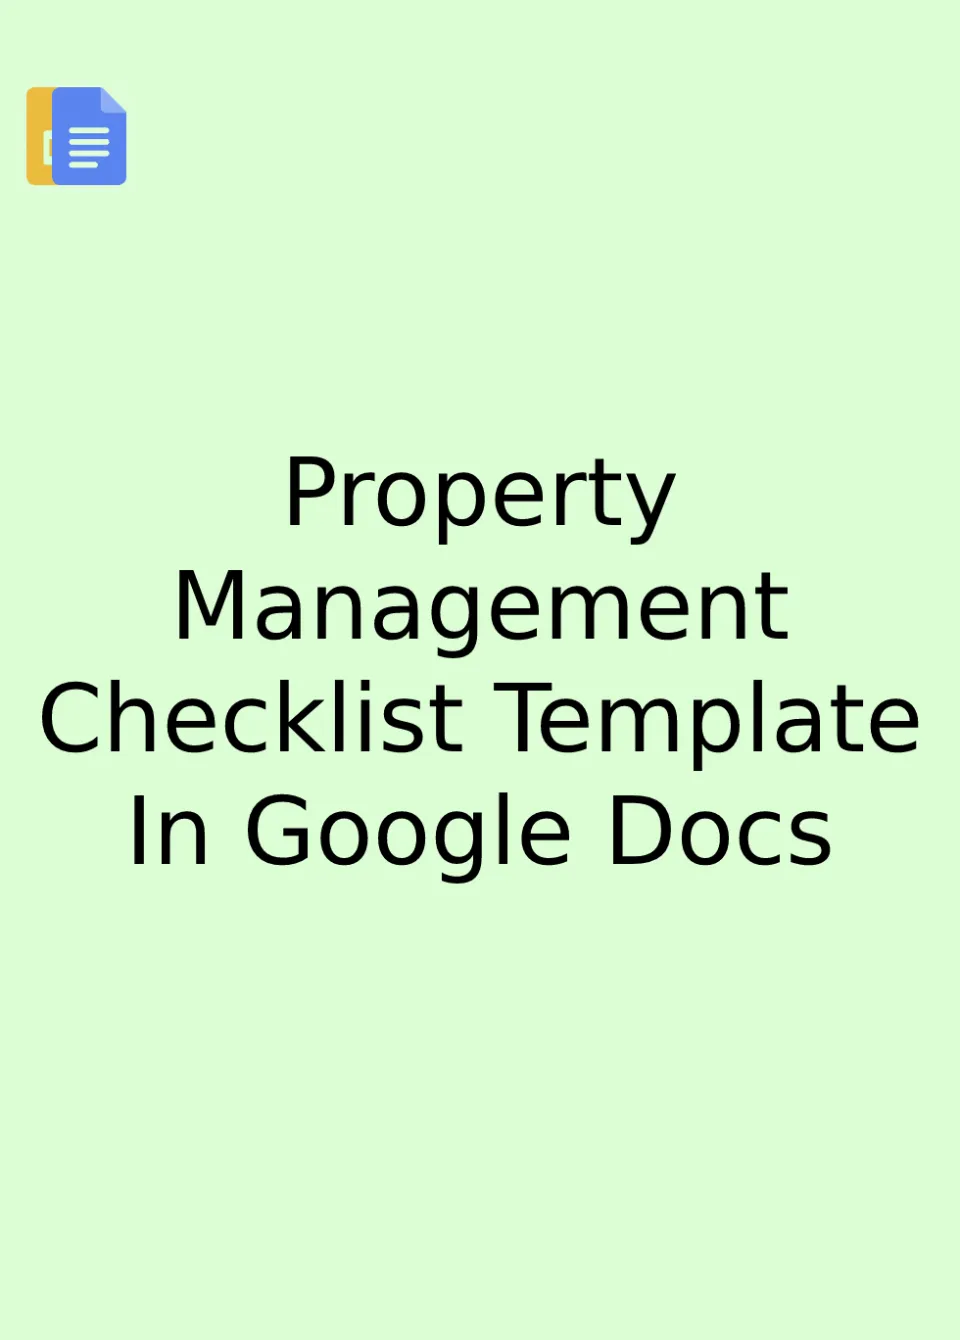 Property Management Checklist Template Google Docs